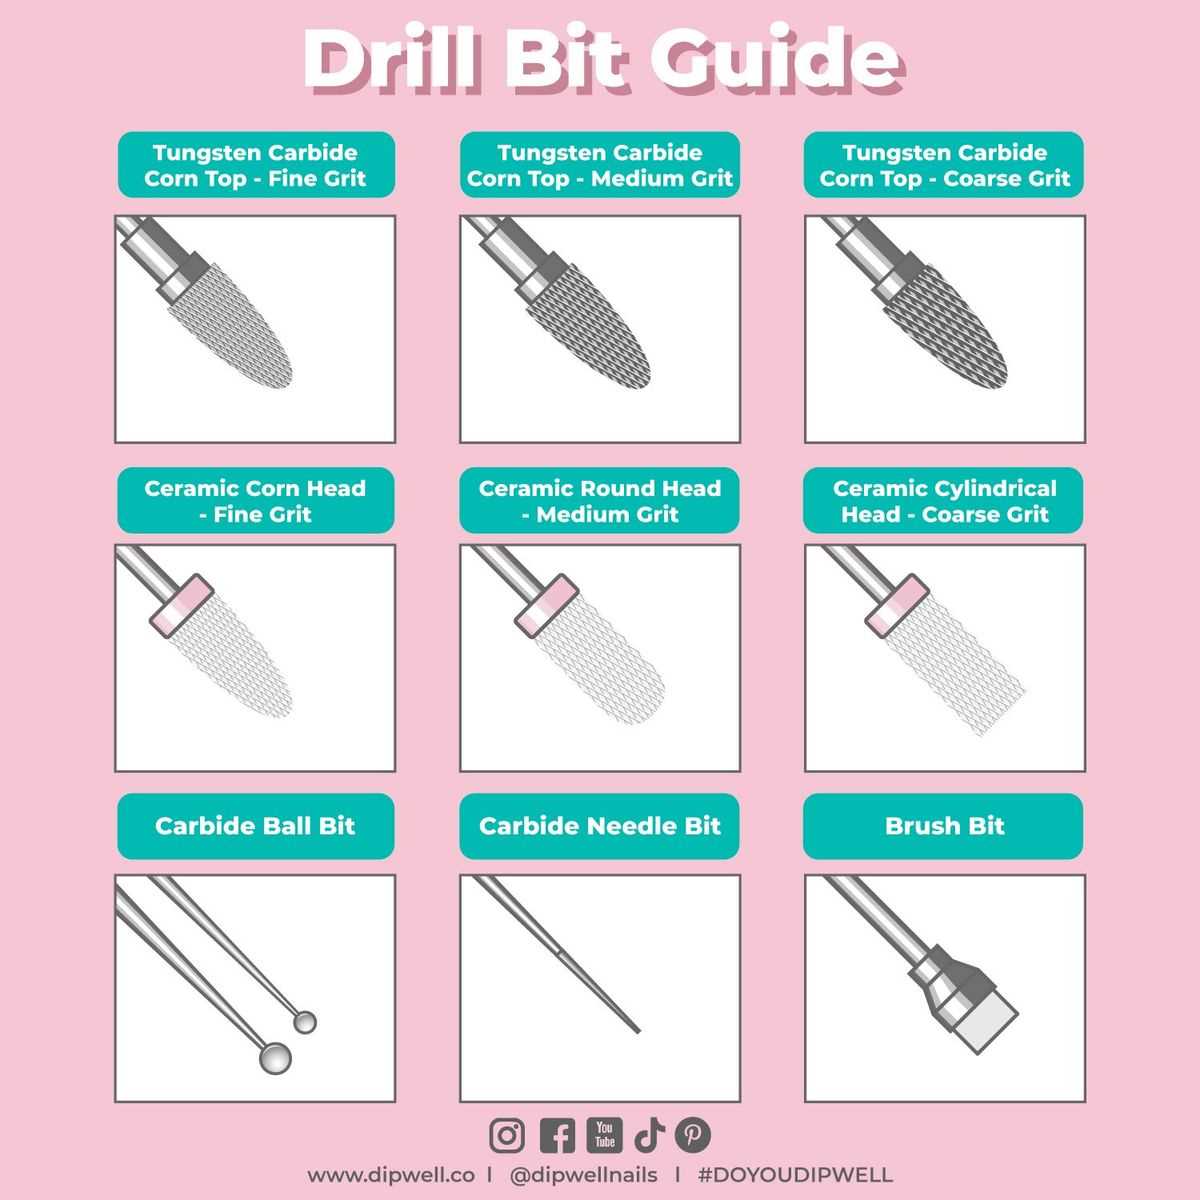 1. Choose the Right Drill Bit